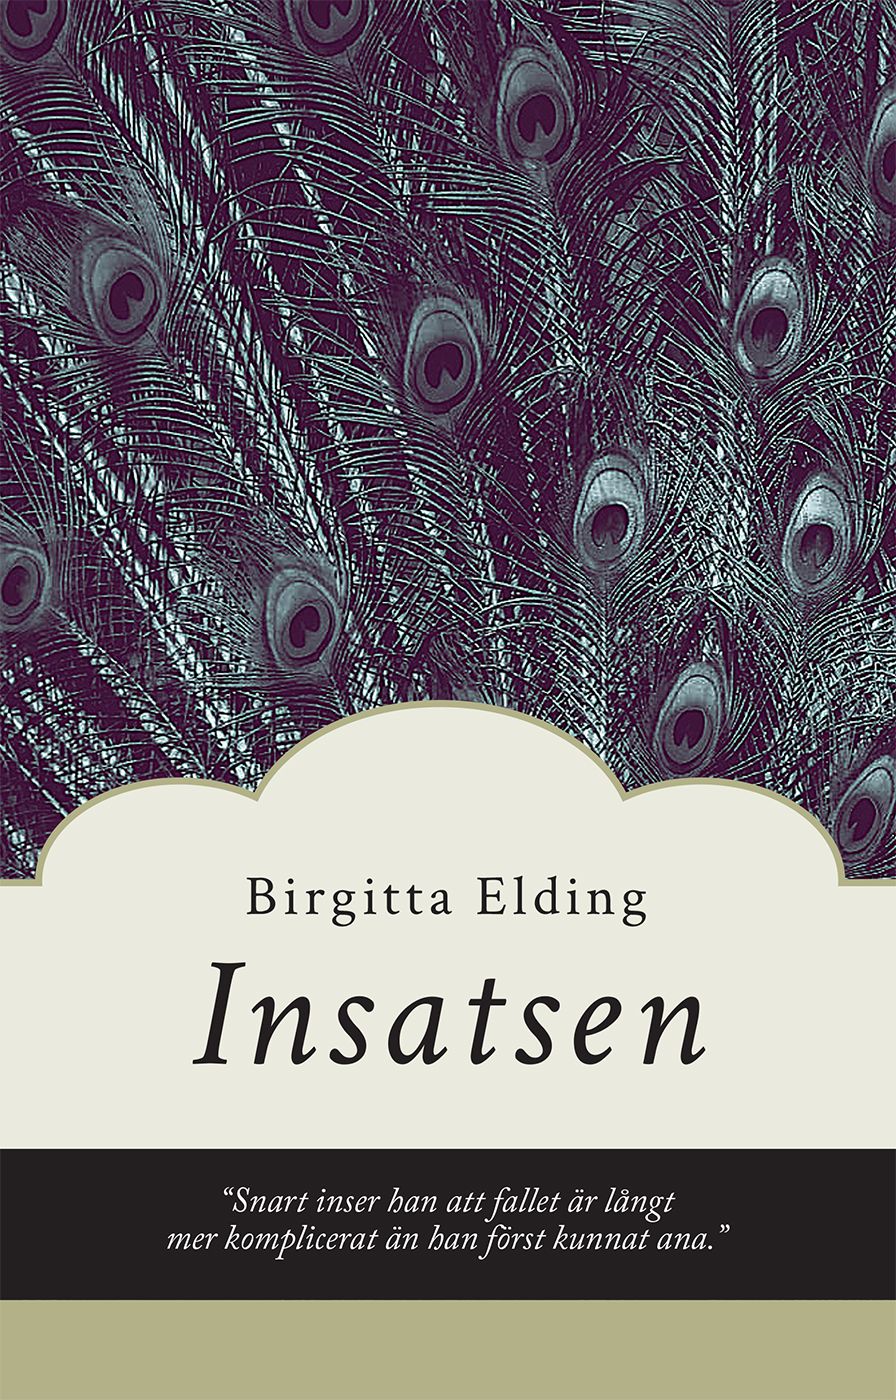 Insatsen, eBook by Birgitta Elding